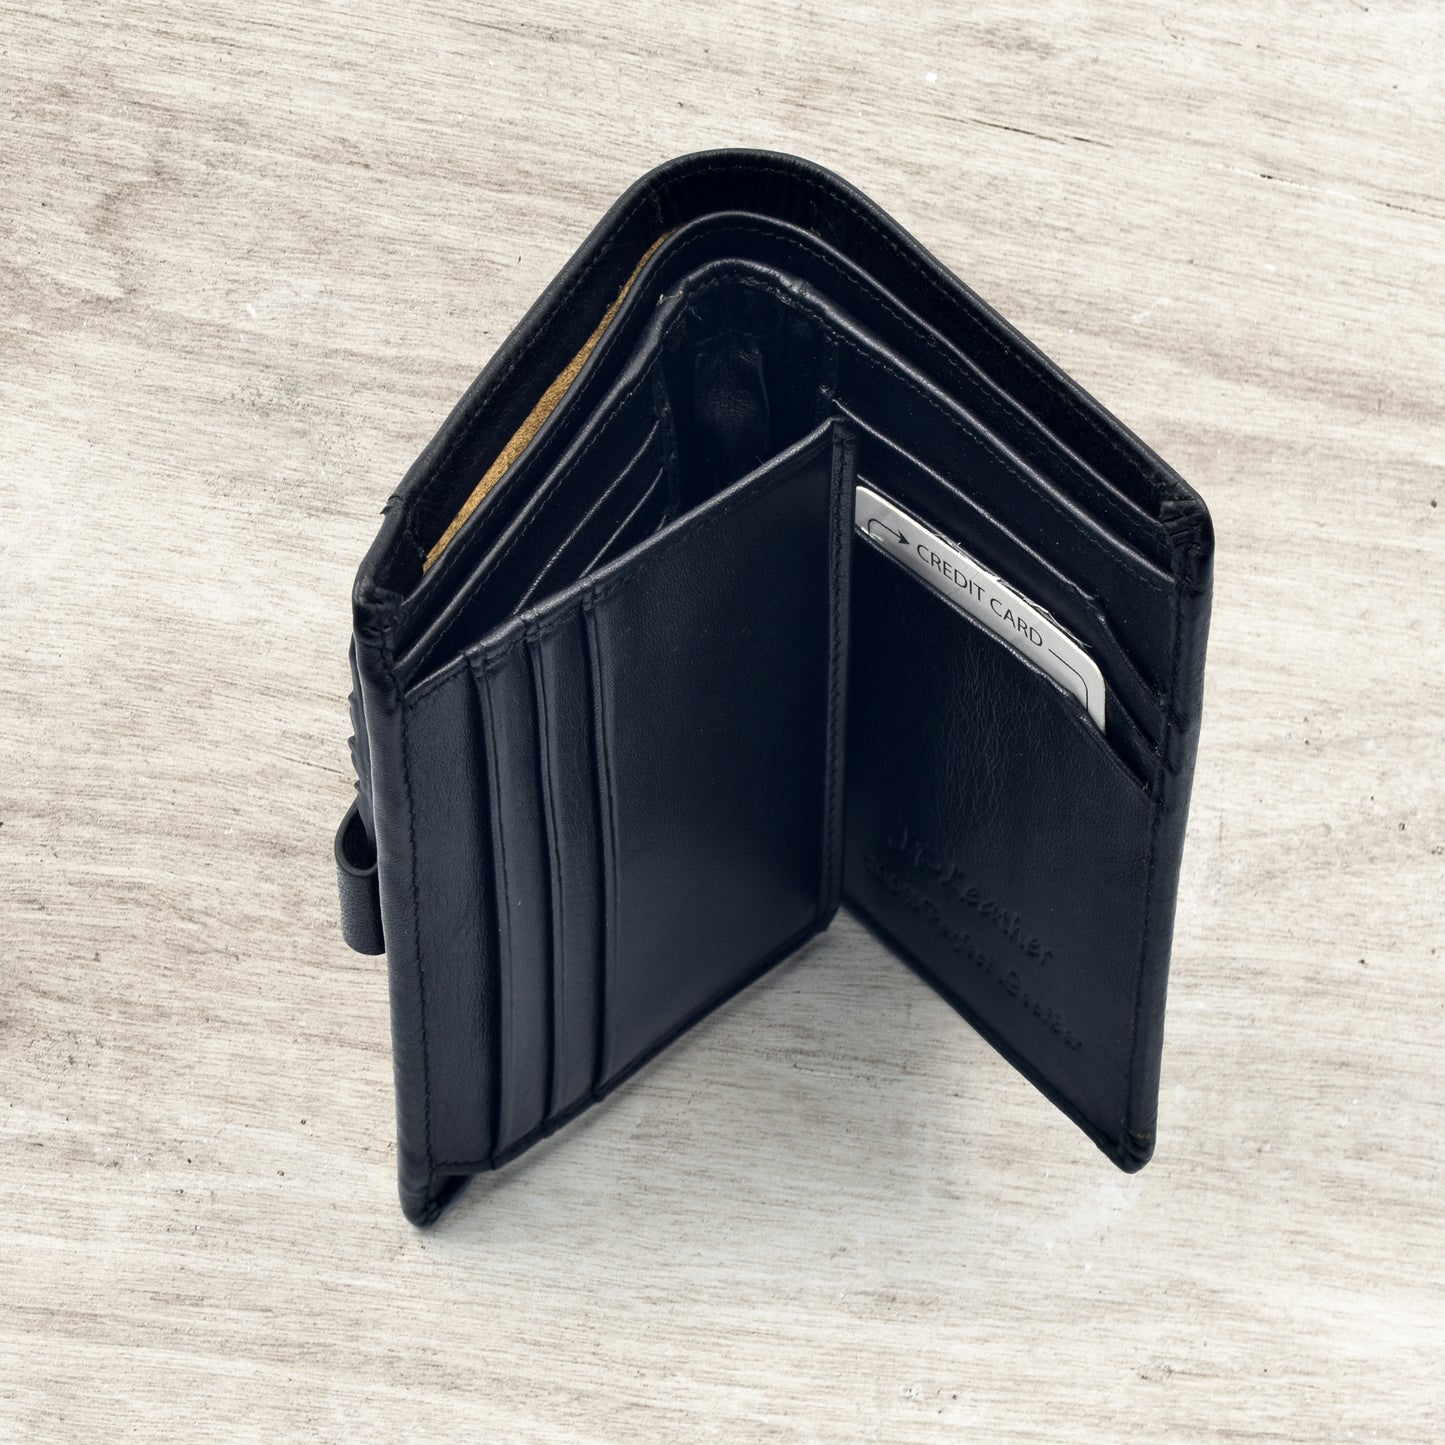 Original Leather Pocket Size Premium Quality Wallet | JP Wallet 58